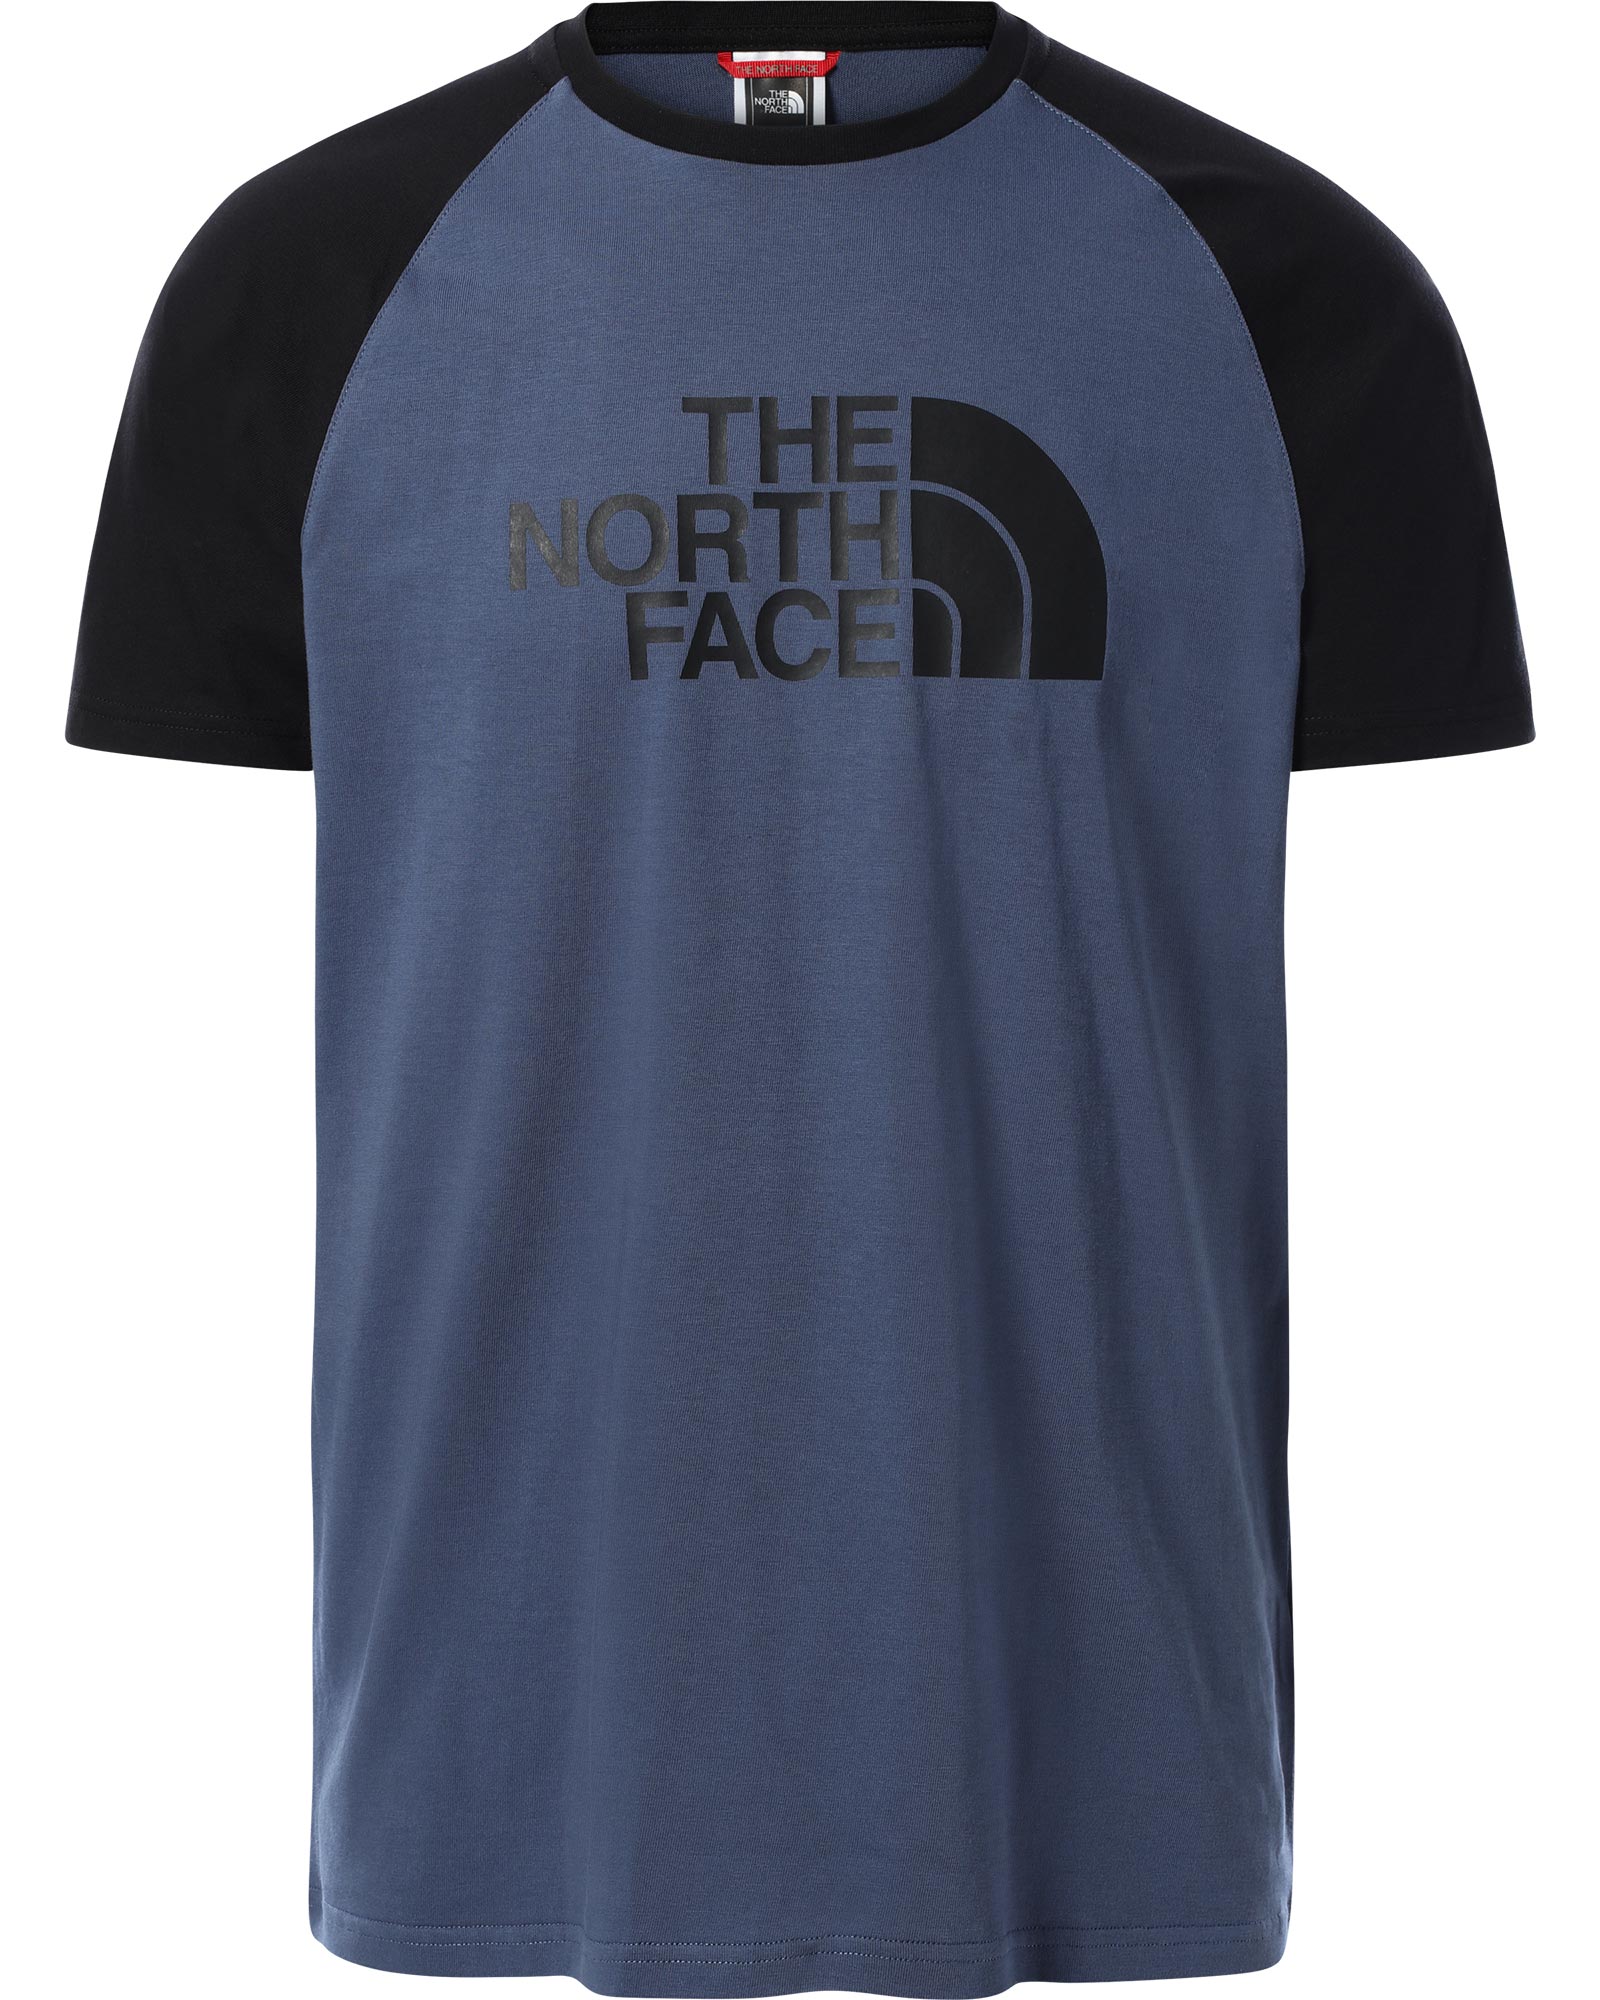 The North Face Raglan Easy Men’s T Shirt - Vintage Indigo S